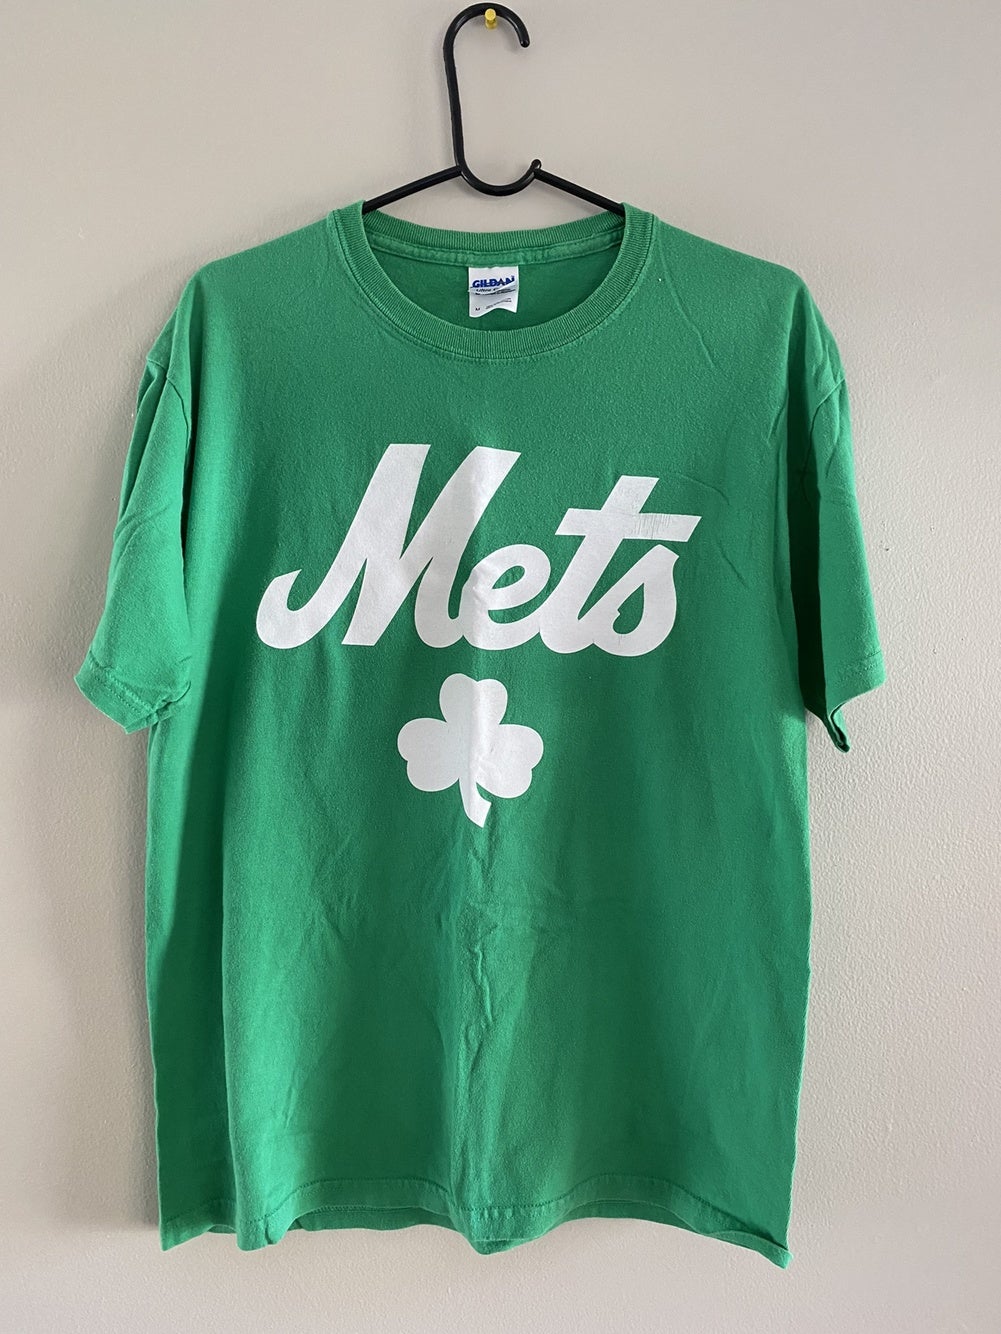 New York Mets Majestic Cool Base CREW NECK MLB Replica Jersey Shirt - YOUTH  MEDIUM